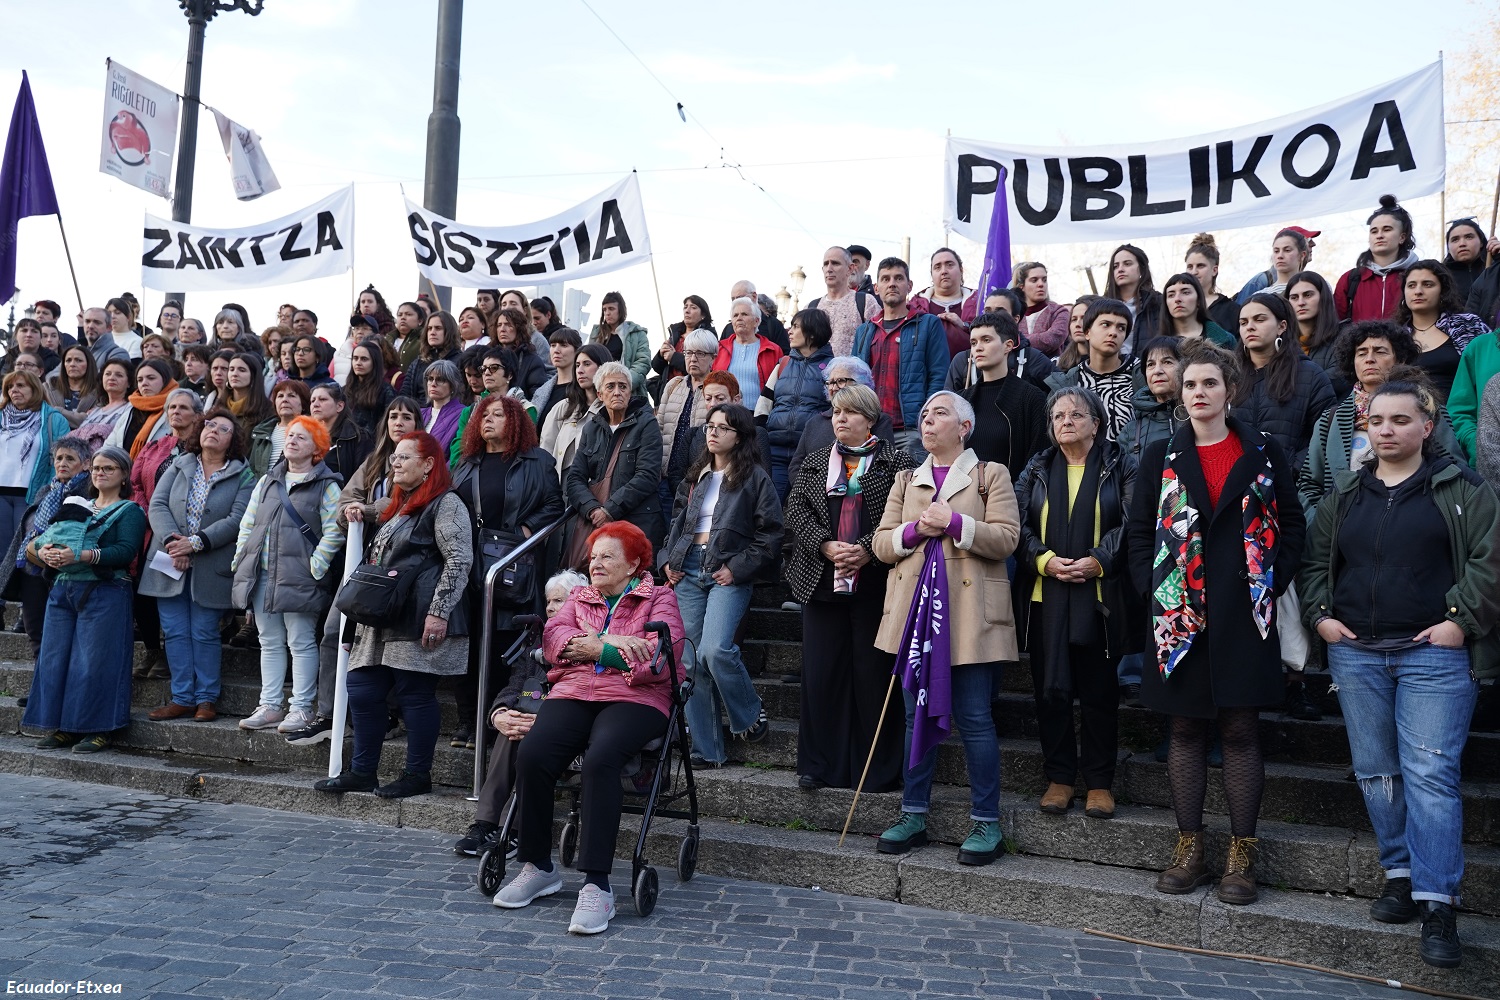 huelga-feminista-general-euskalherria-vasca-machismo-gobierno-elecciones-políticos-mujeres-cuidados